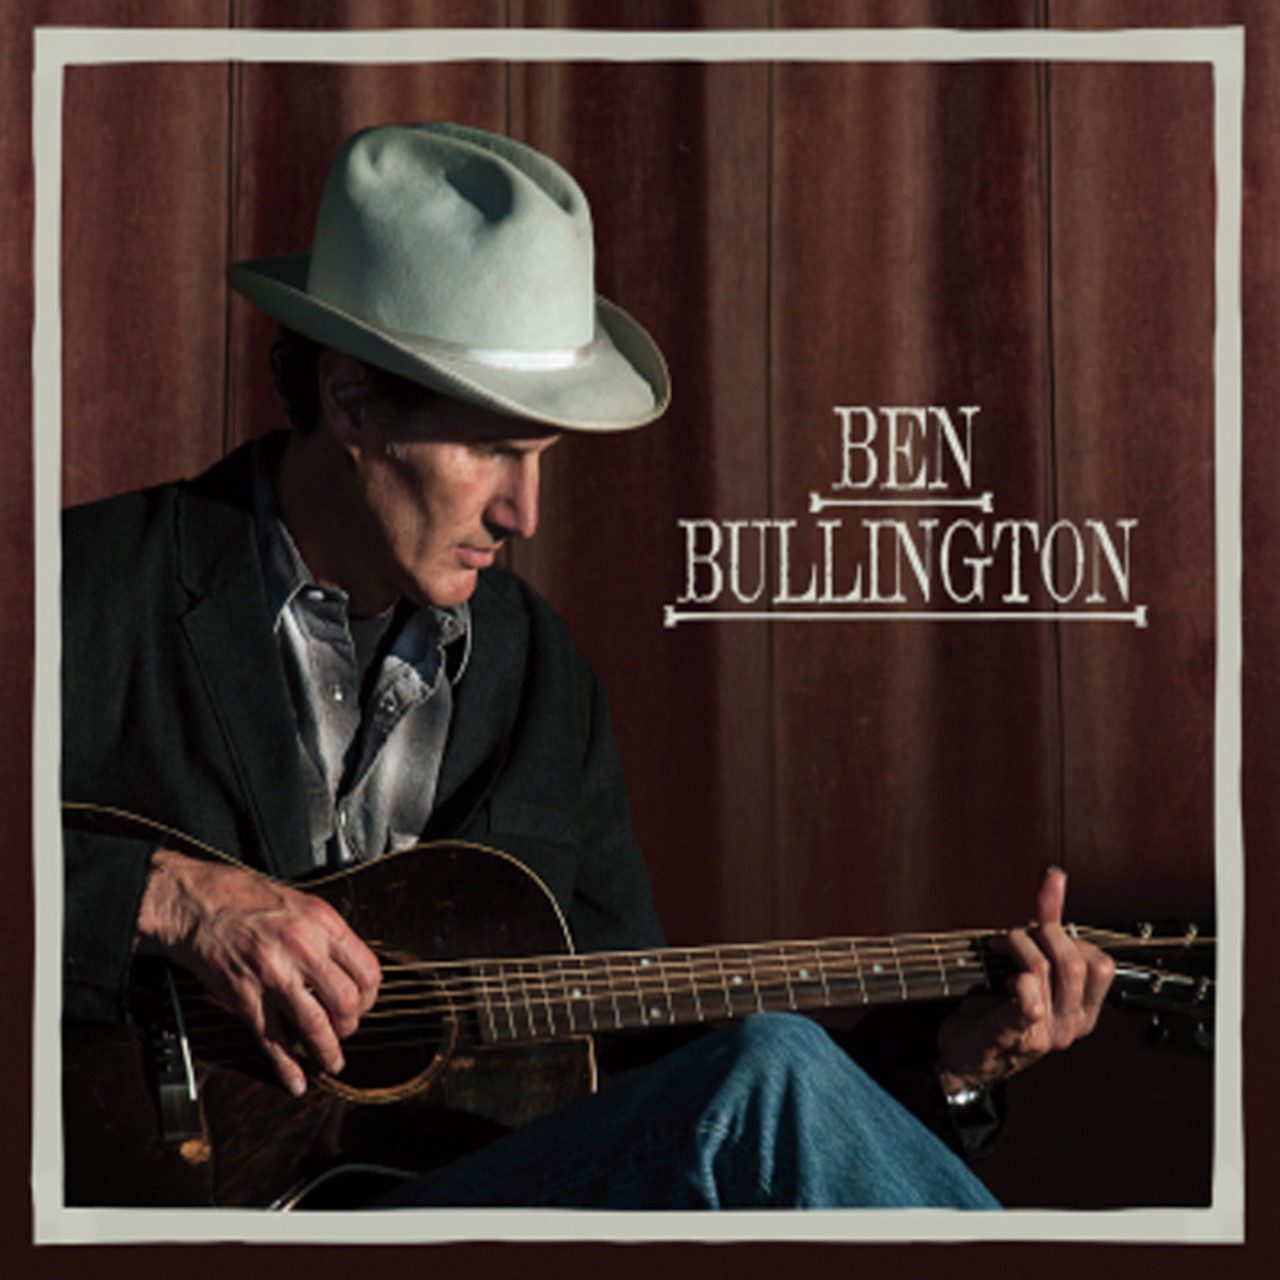 Ben Bullington - Ben Bullington cover album